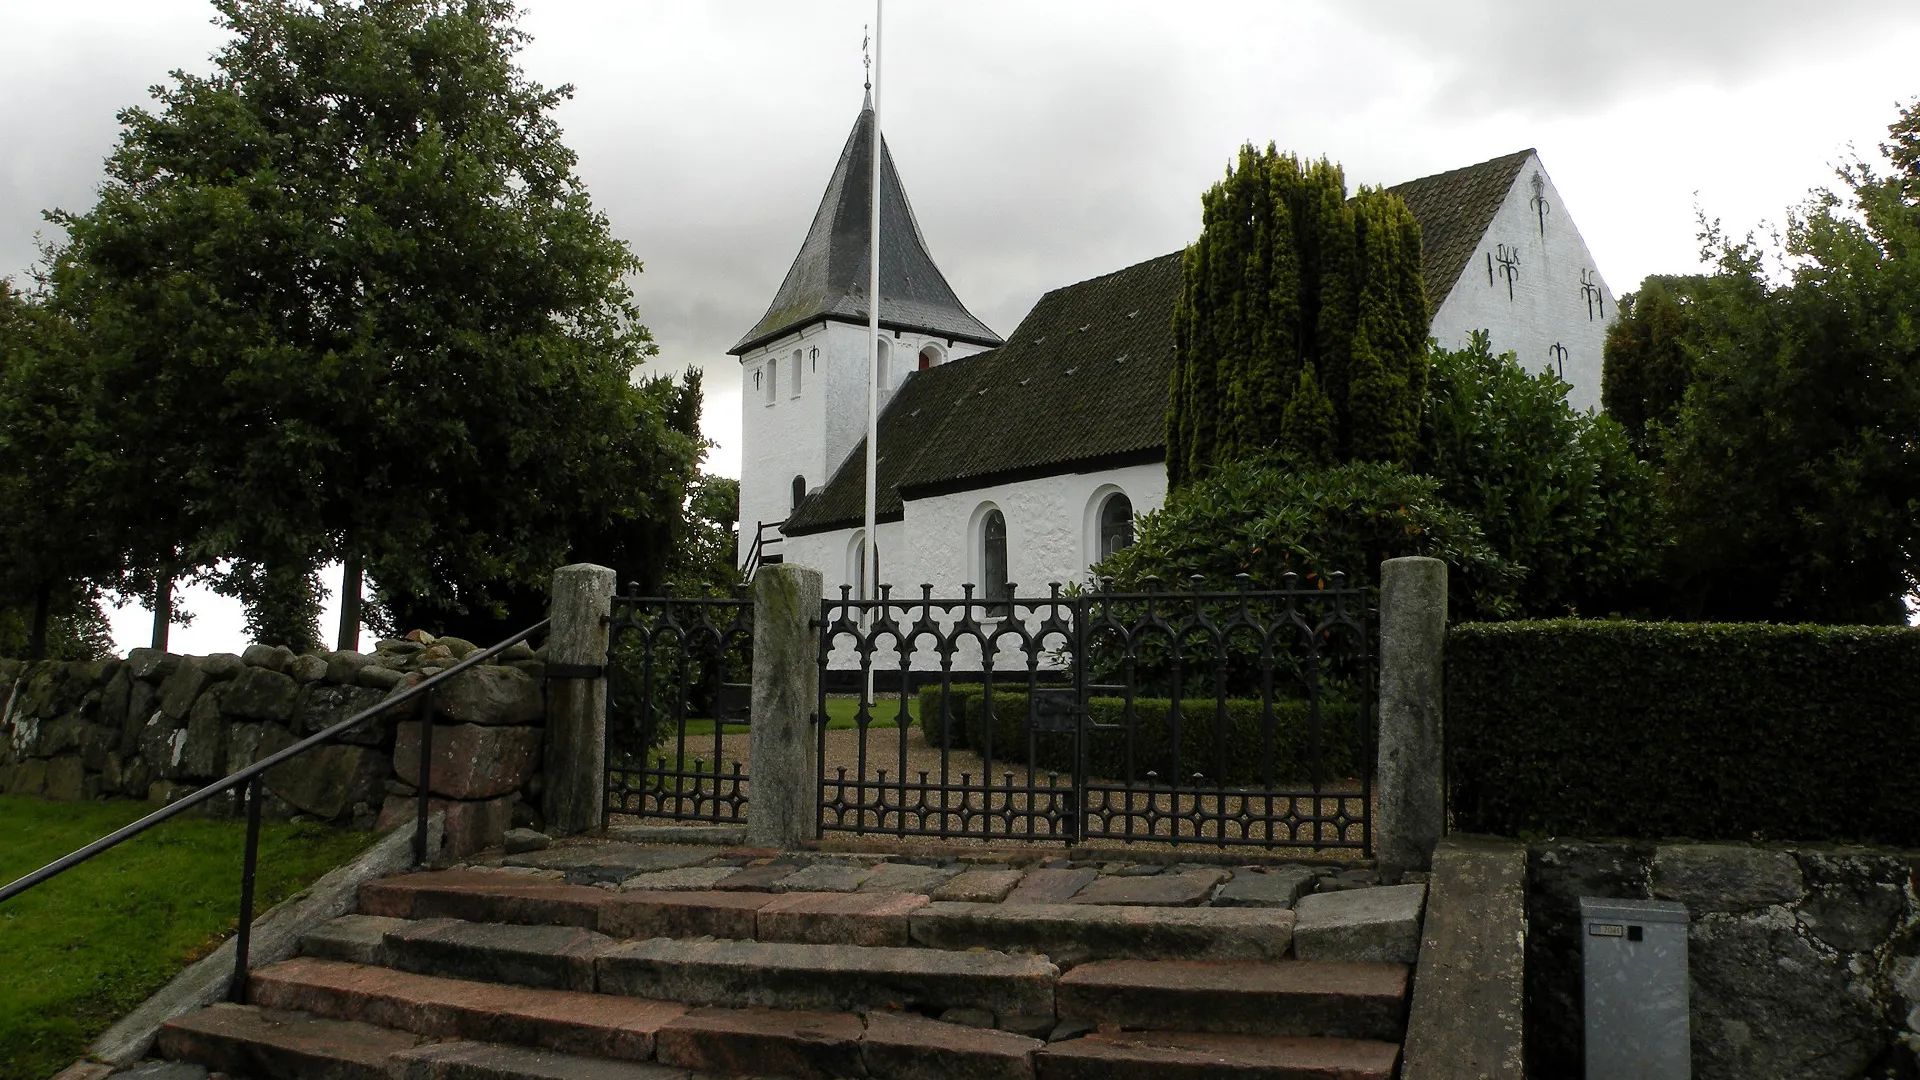 Hjerndrup Kirke